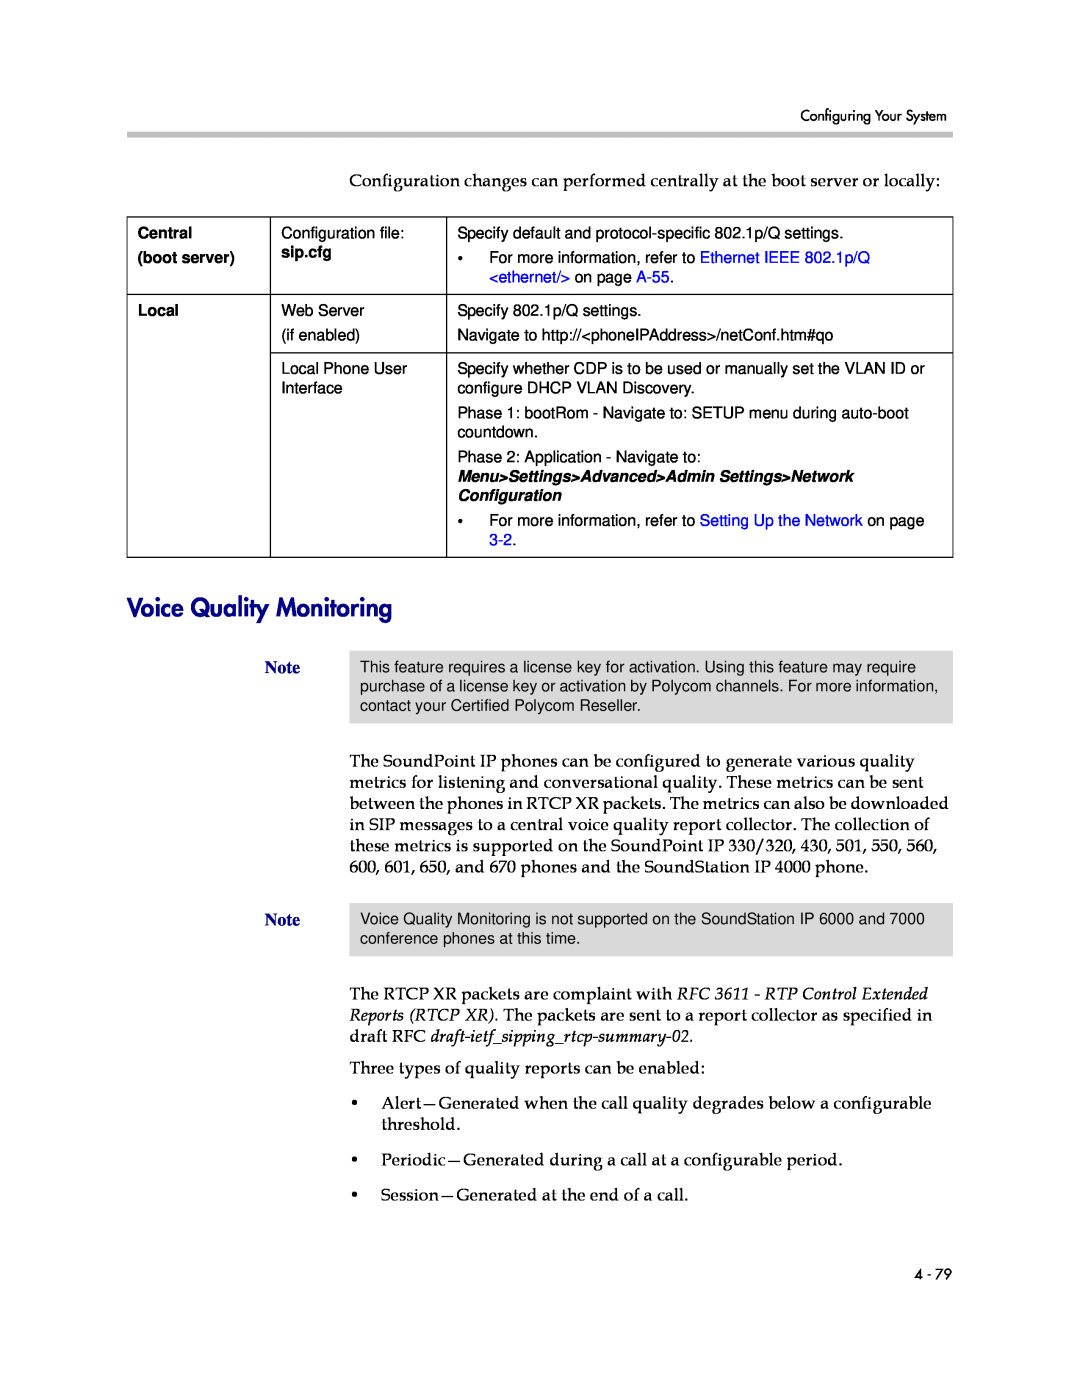 Polycom SIP 3.1 manual Voice Quality Monitoring, draft RFC draft-ietfsippingrtcp-summary-02 